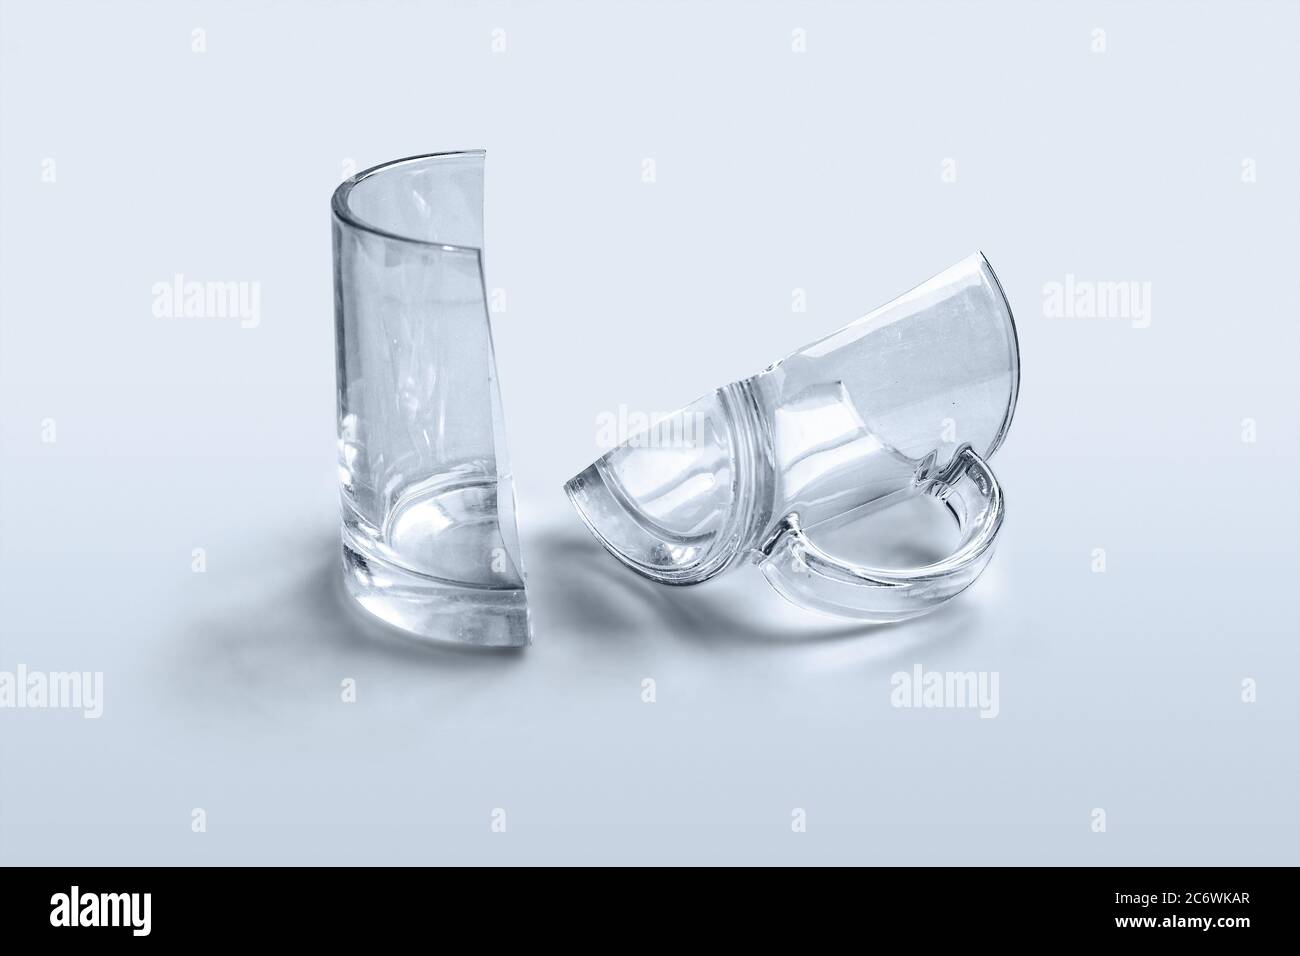 https://c8.alamy.com/comp/2C6WKAR/broken-glass-cup-two-halves-2C6WKAR.jpg